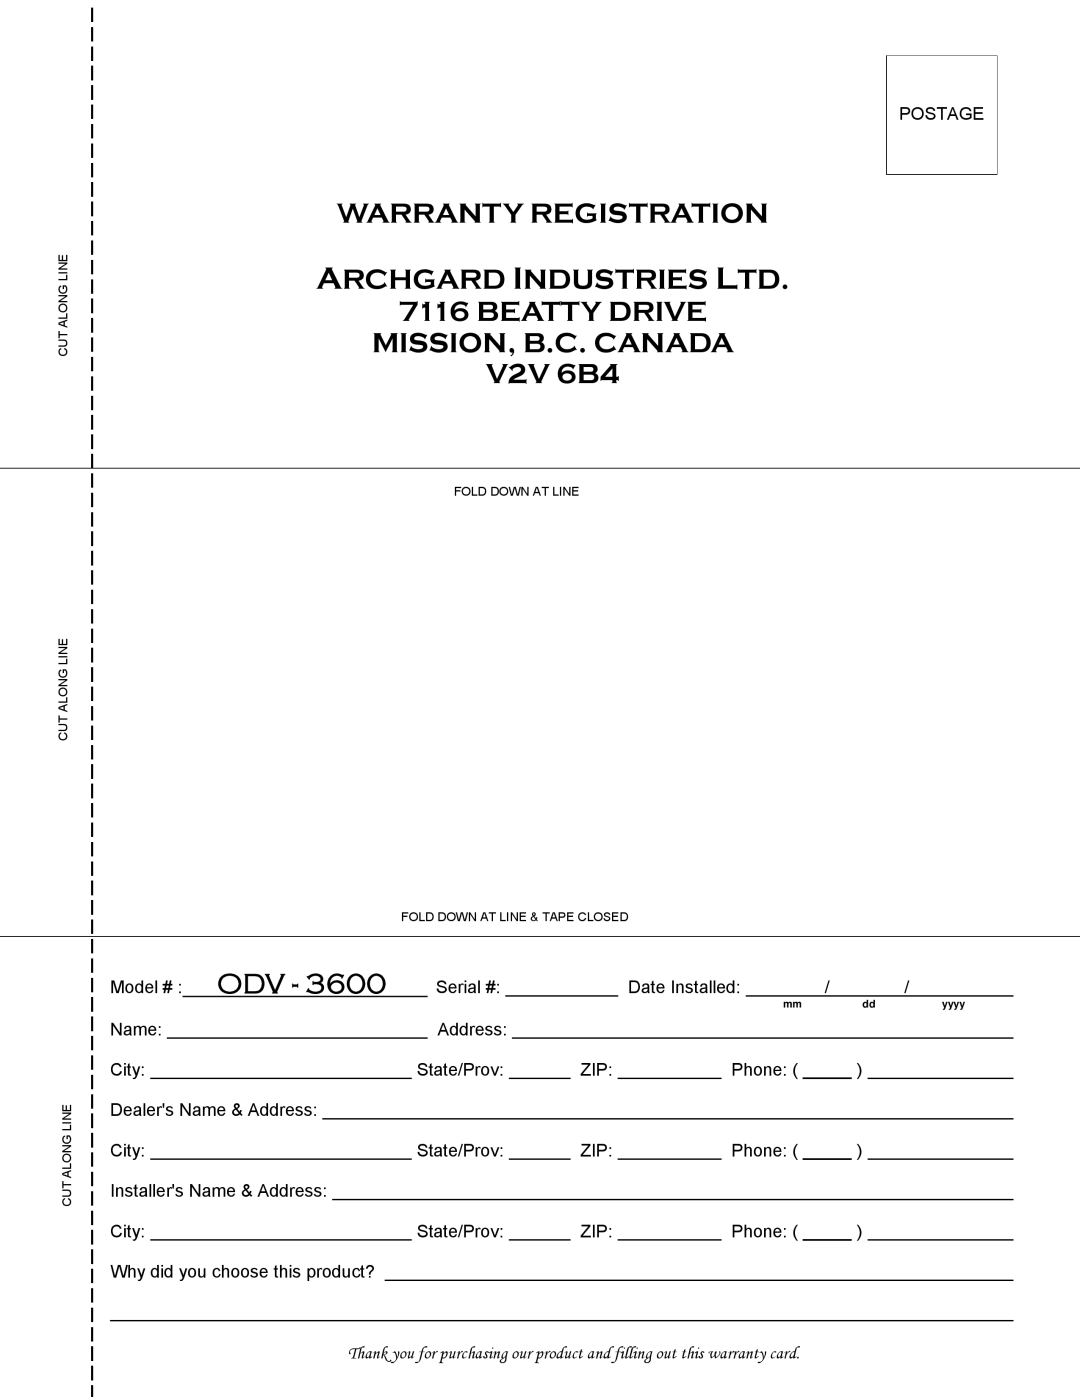 Optima Company Optima 3600O manual BEATTY DRIVE MISSION, B.C. CANADA V2V 6B4, Odv 